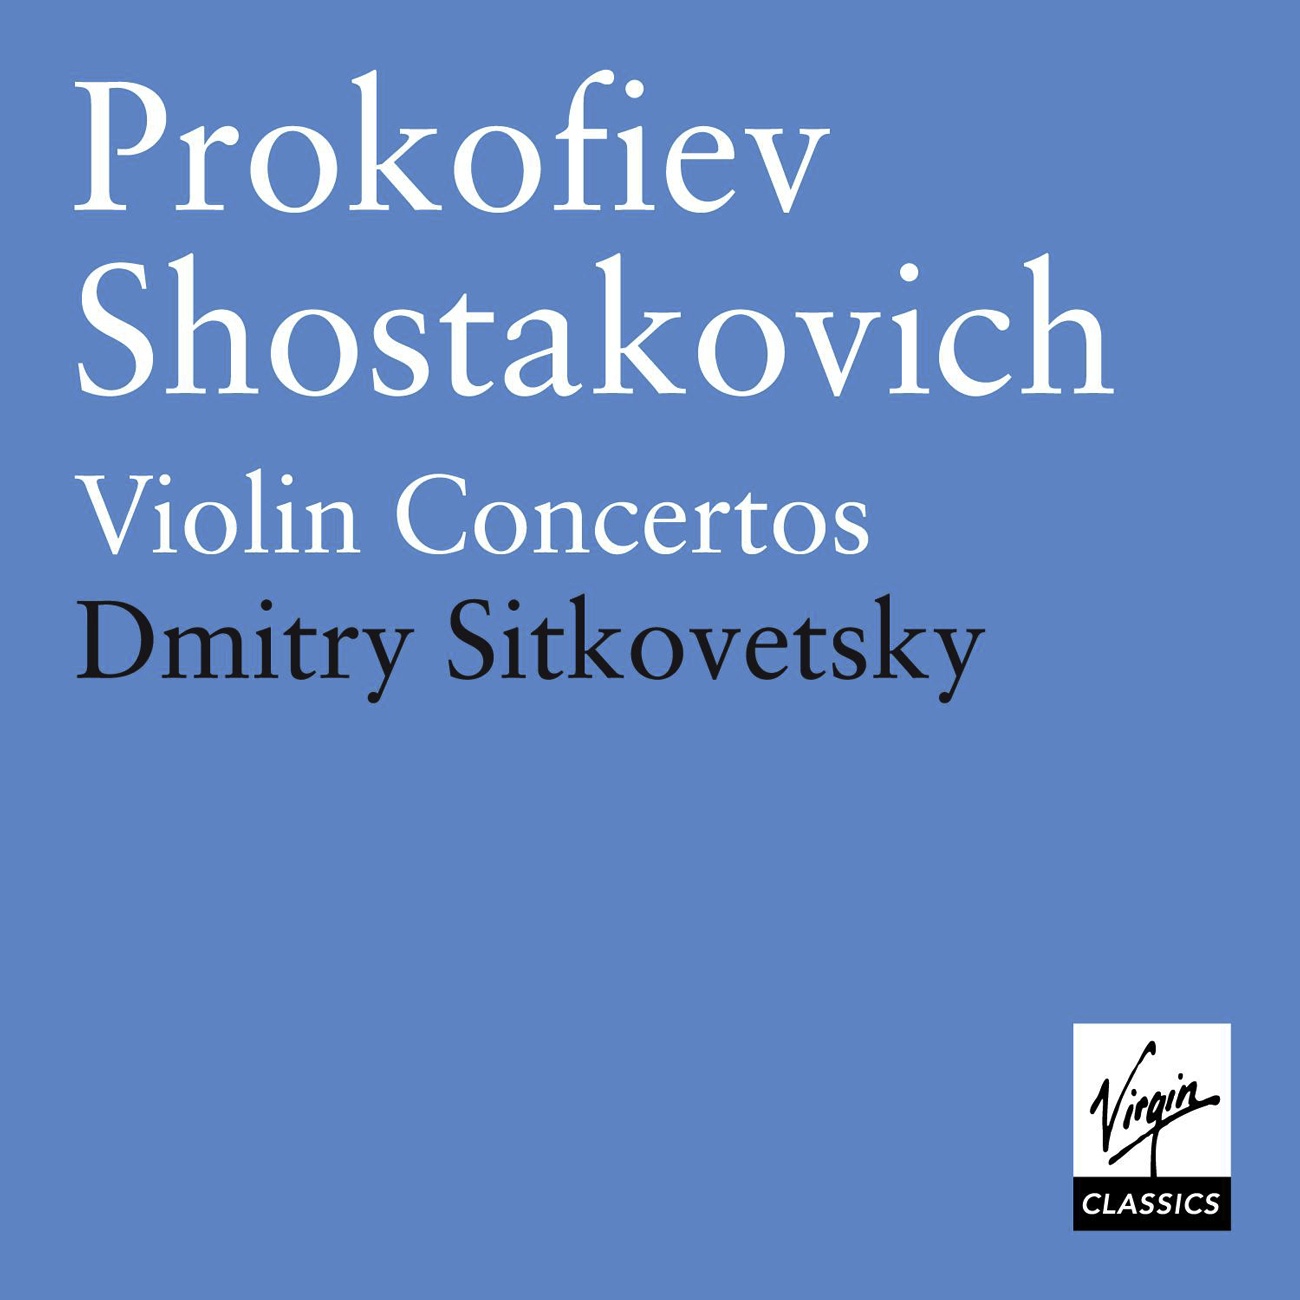 Violin Concerto No. 2 in C sharp minor Op. 129: I. Moderato